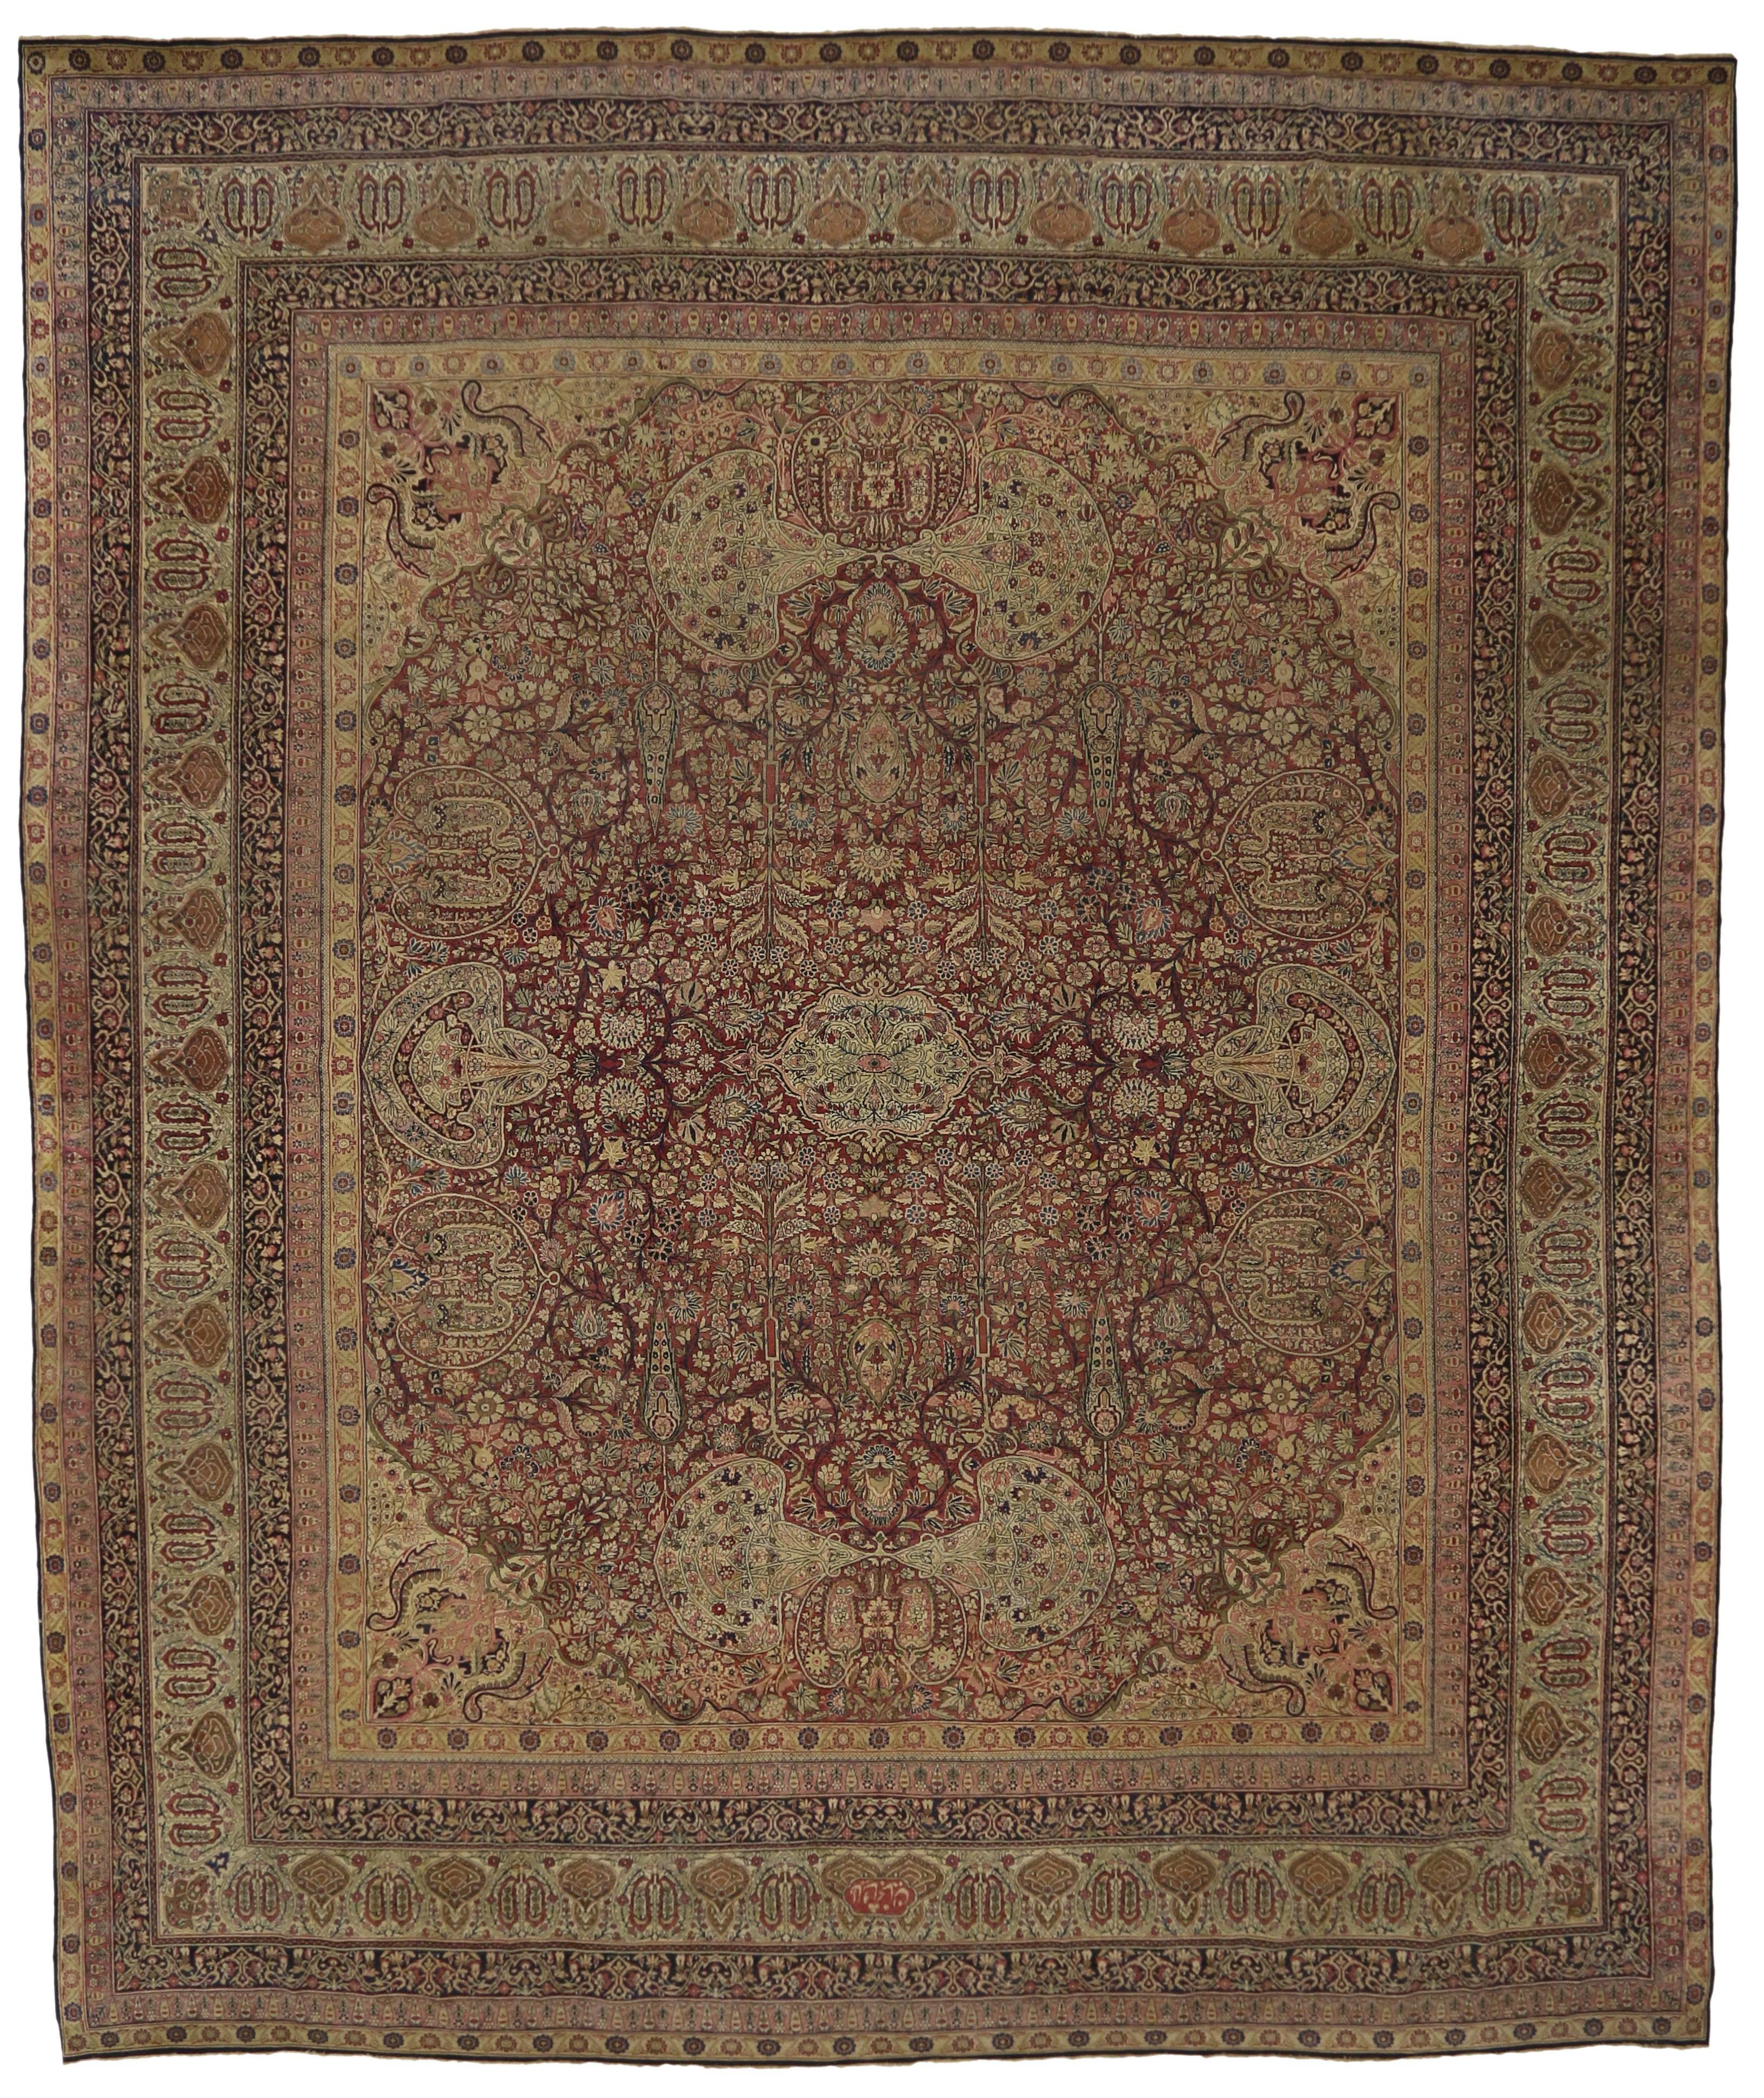 Wool 1880s Oversized Antique Persian Kermanshah Rug, Hotel Lobby Size Carpet For Sale